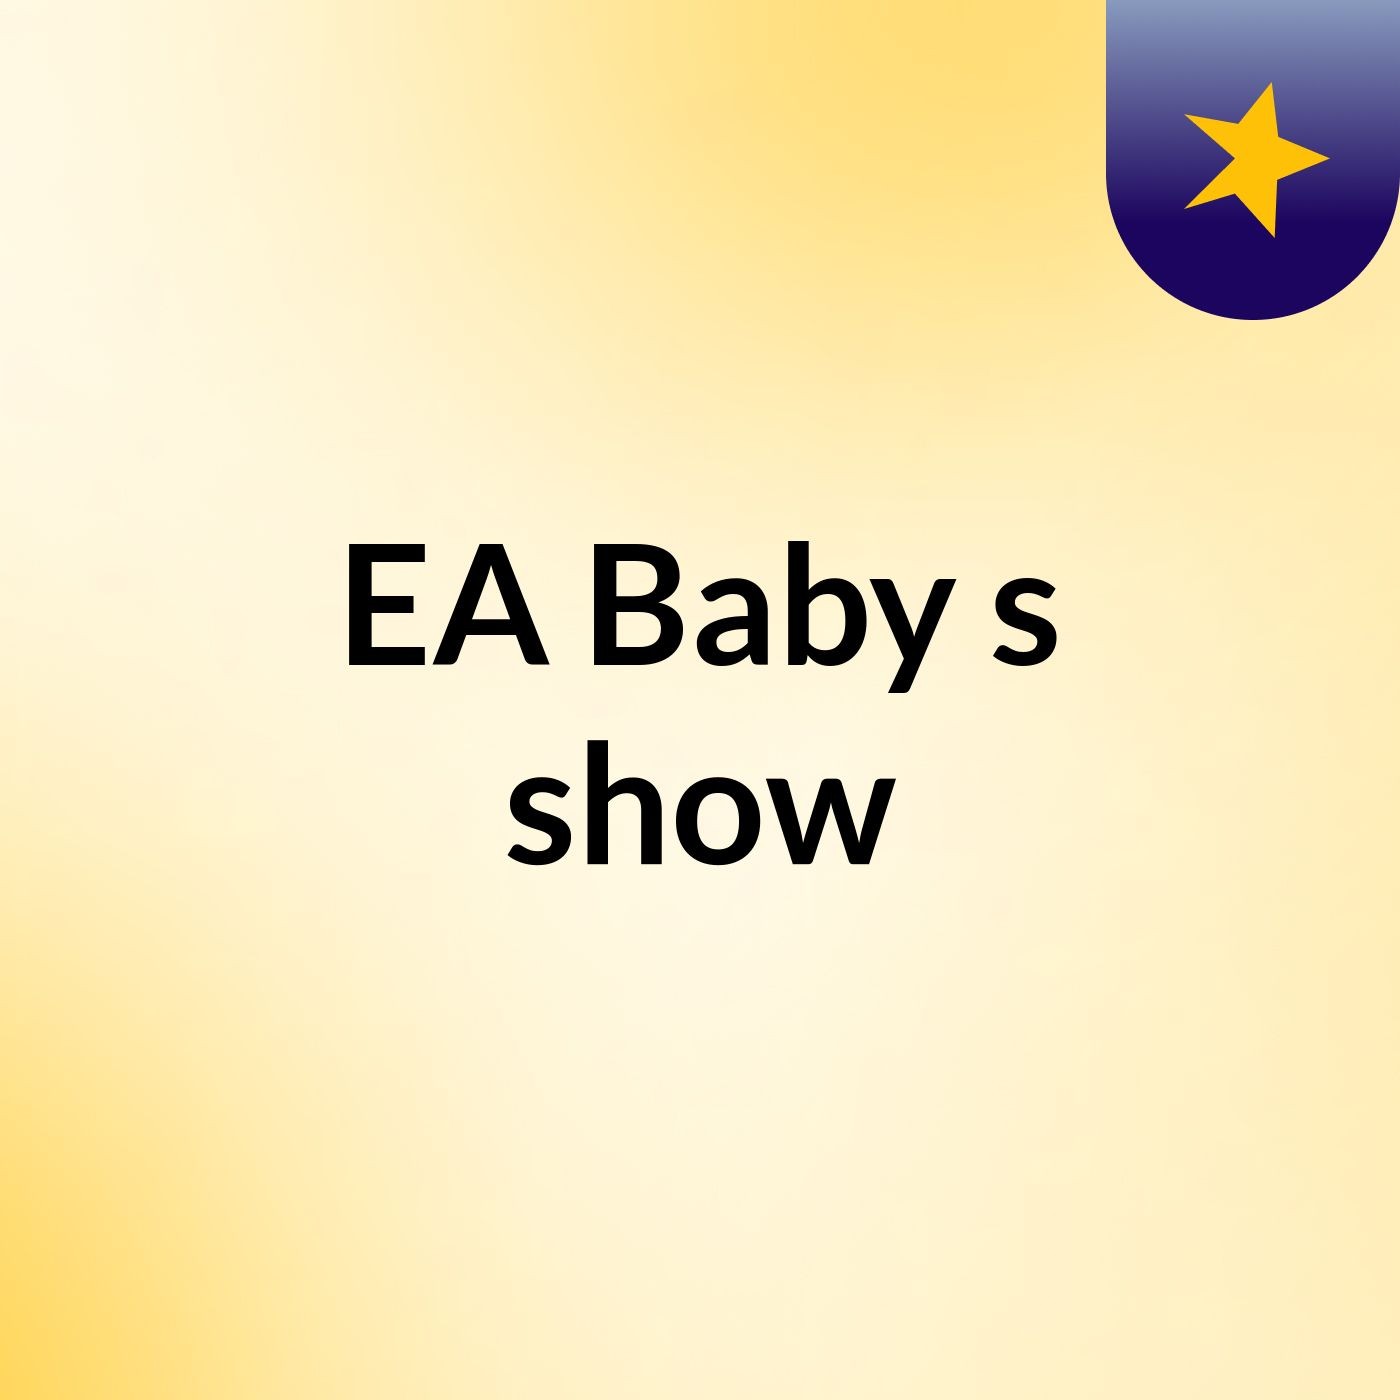 EA Baby's show